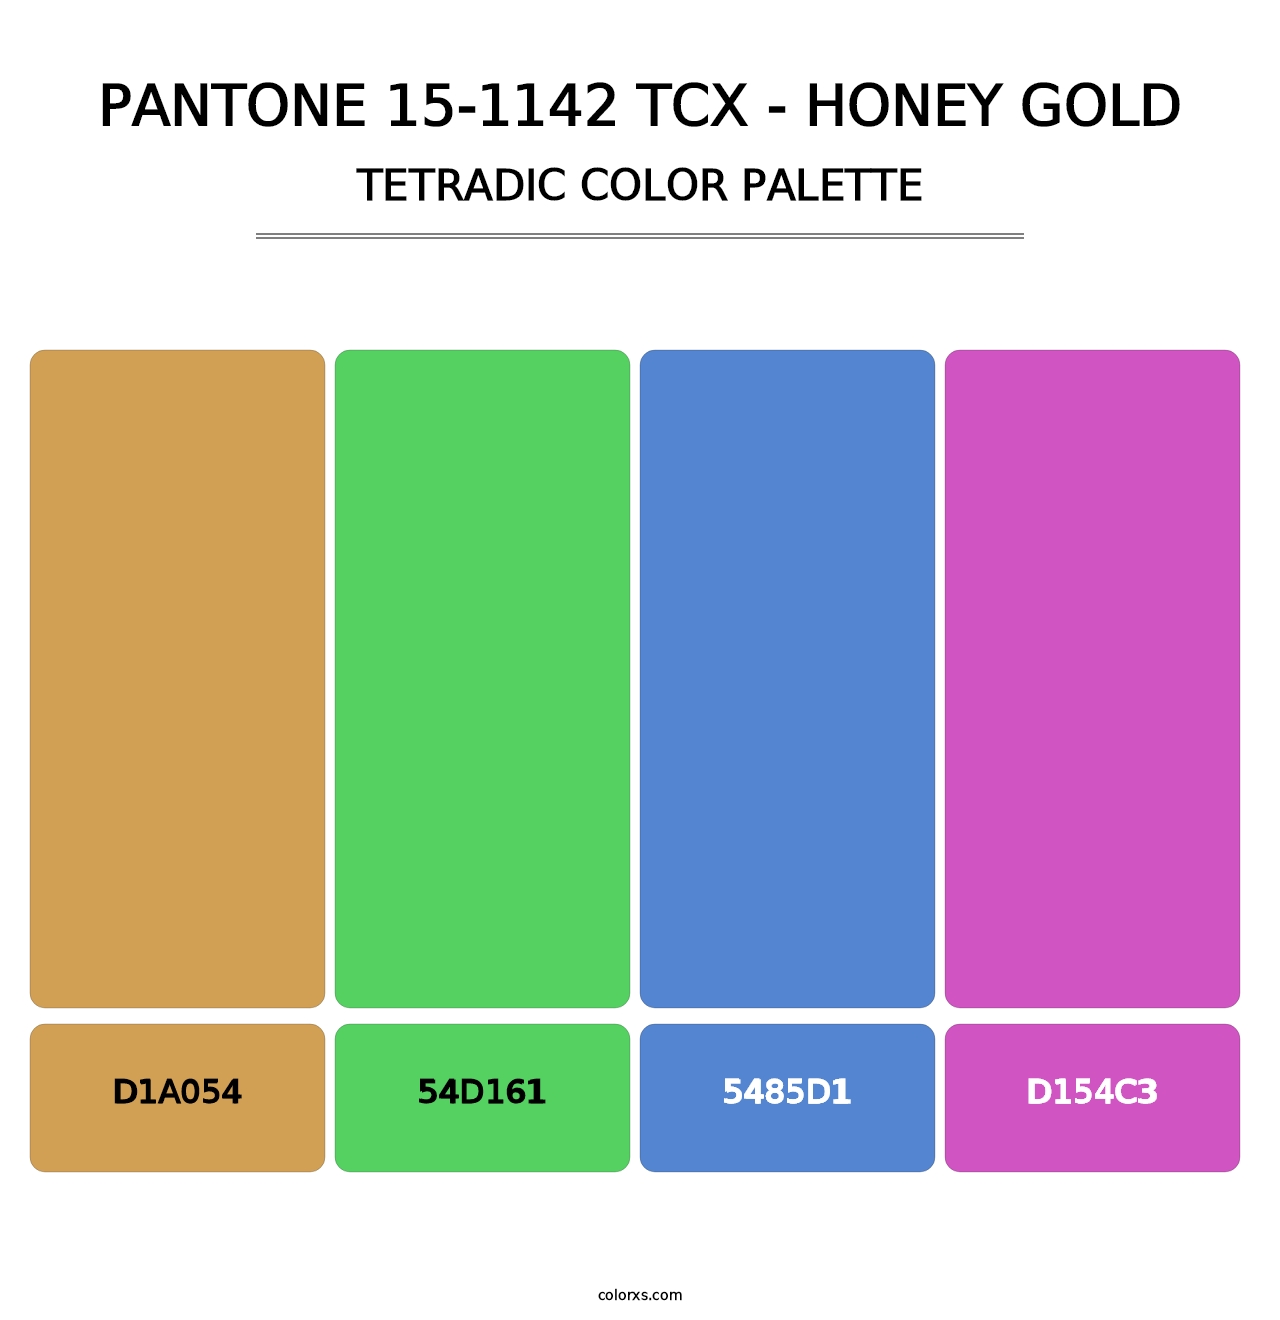 PANTONE 15-1142 TCX - Honey Gold - Tetradic Color Palette